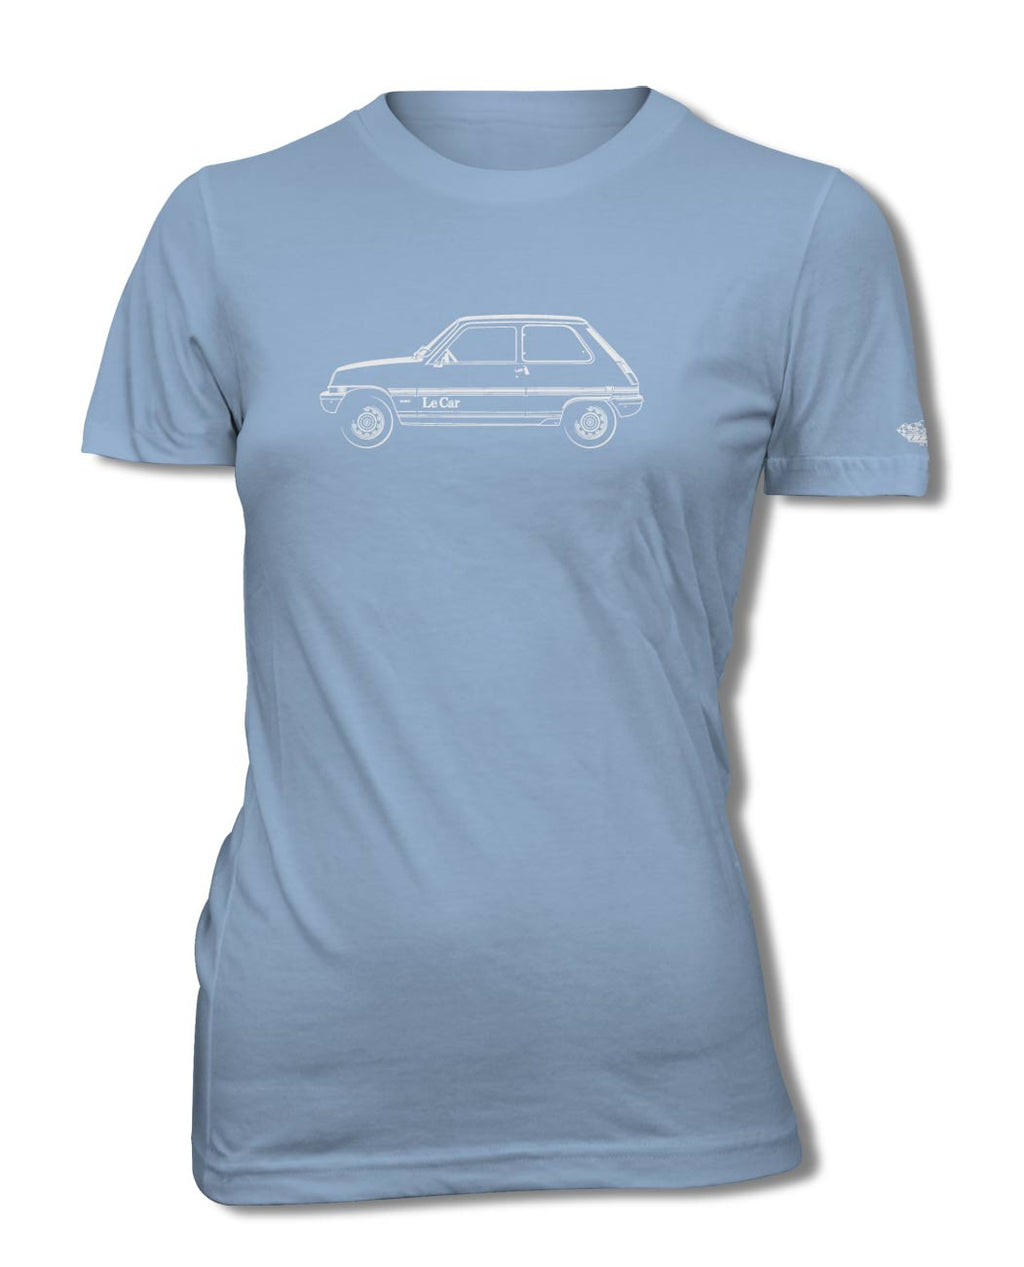 Renault 5 / R5 LeCar T-Shirt - Women - Side View